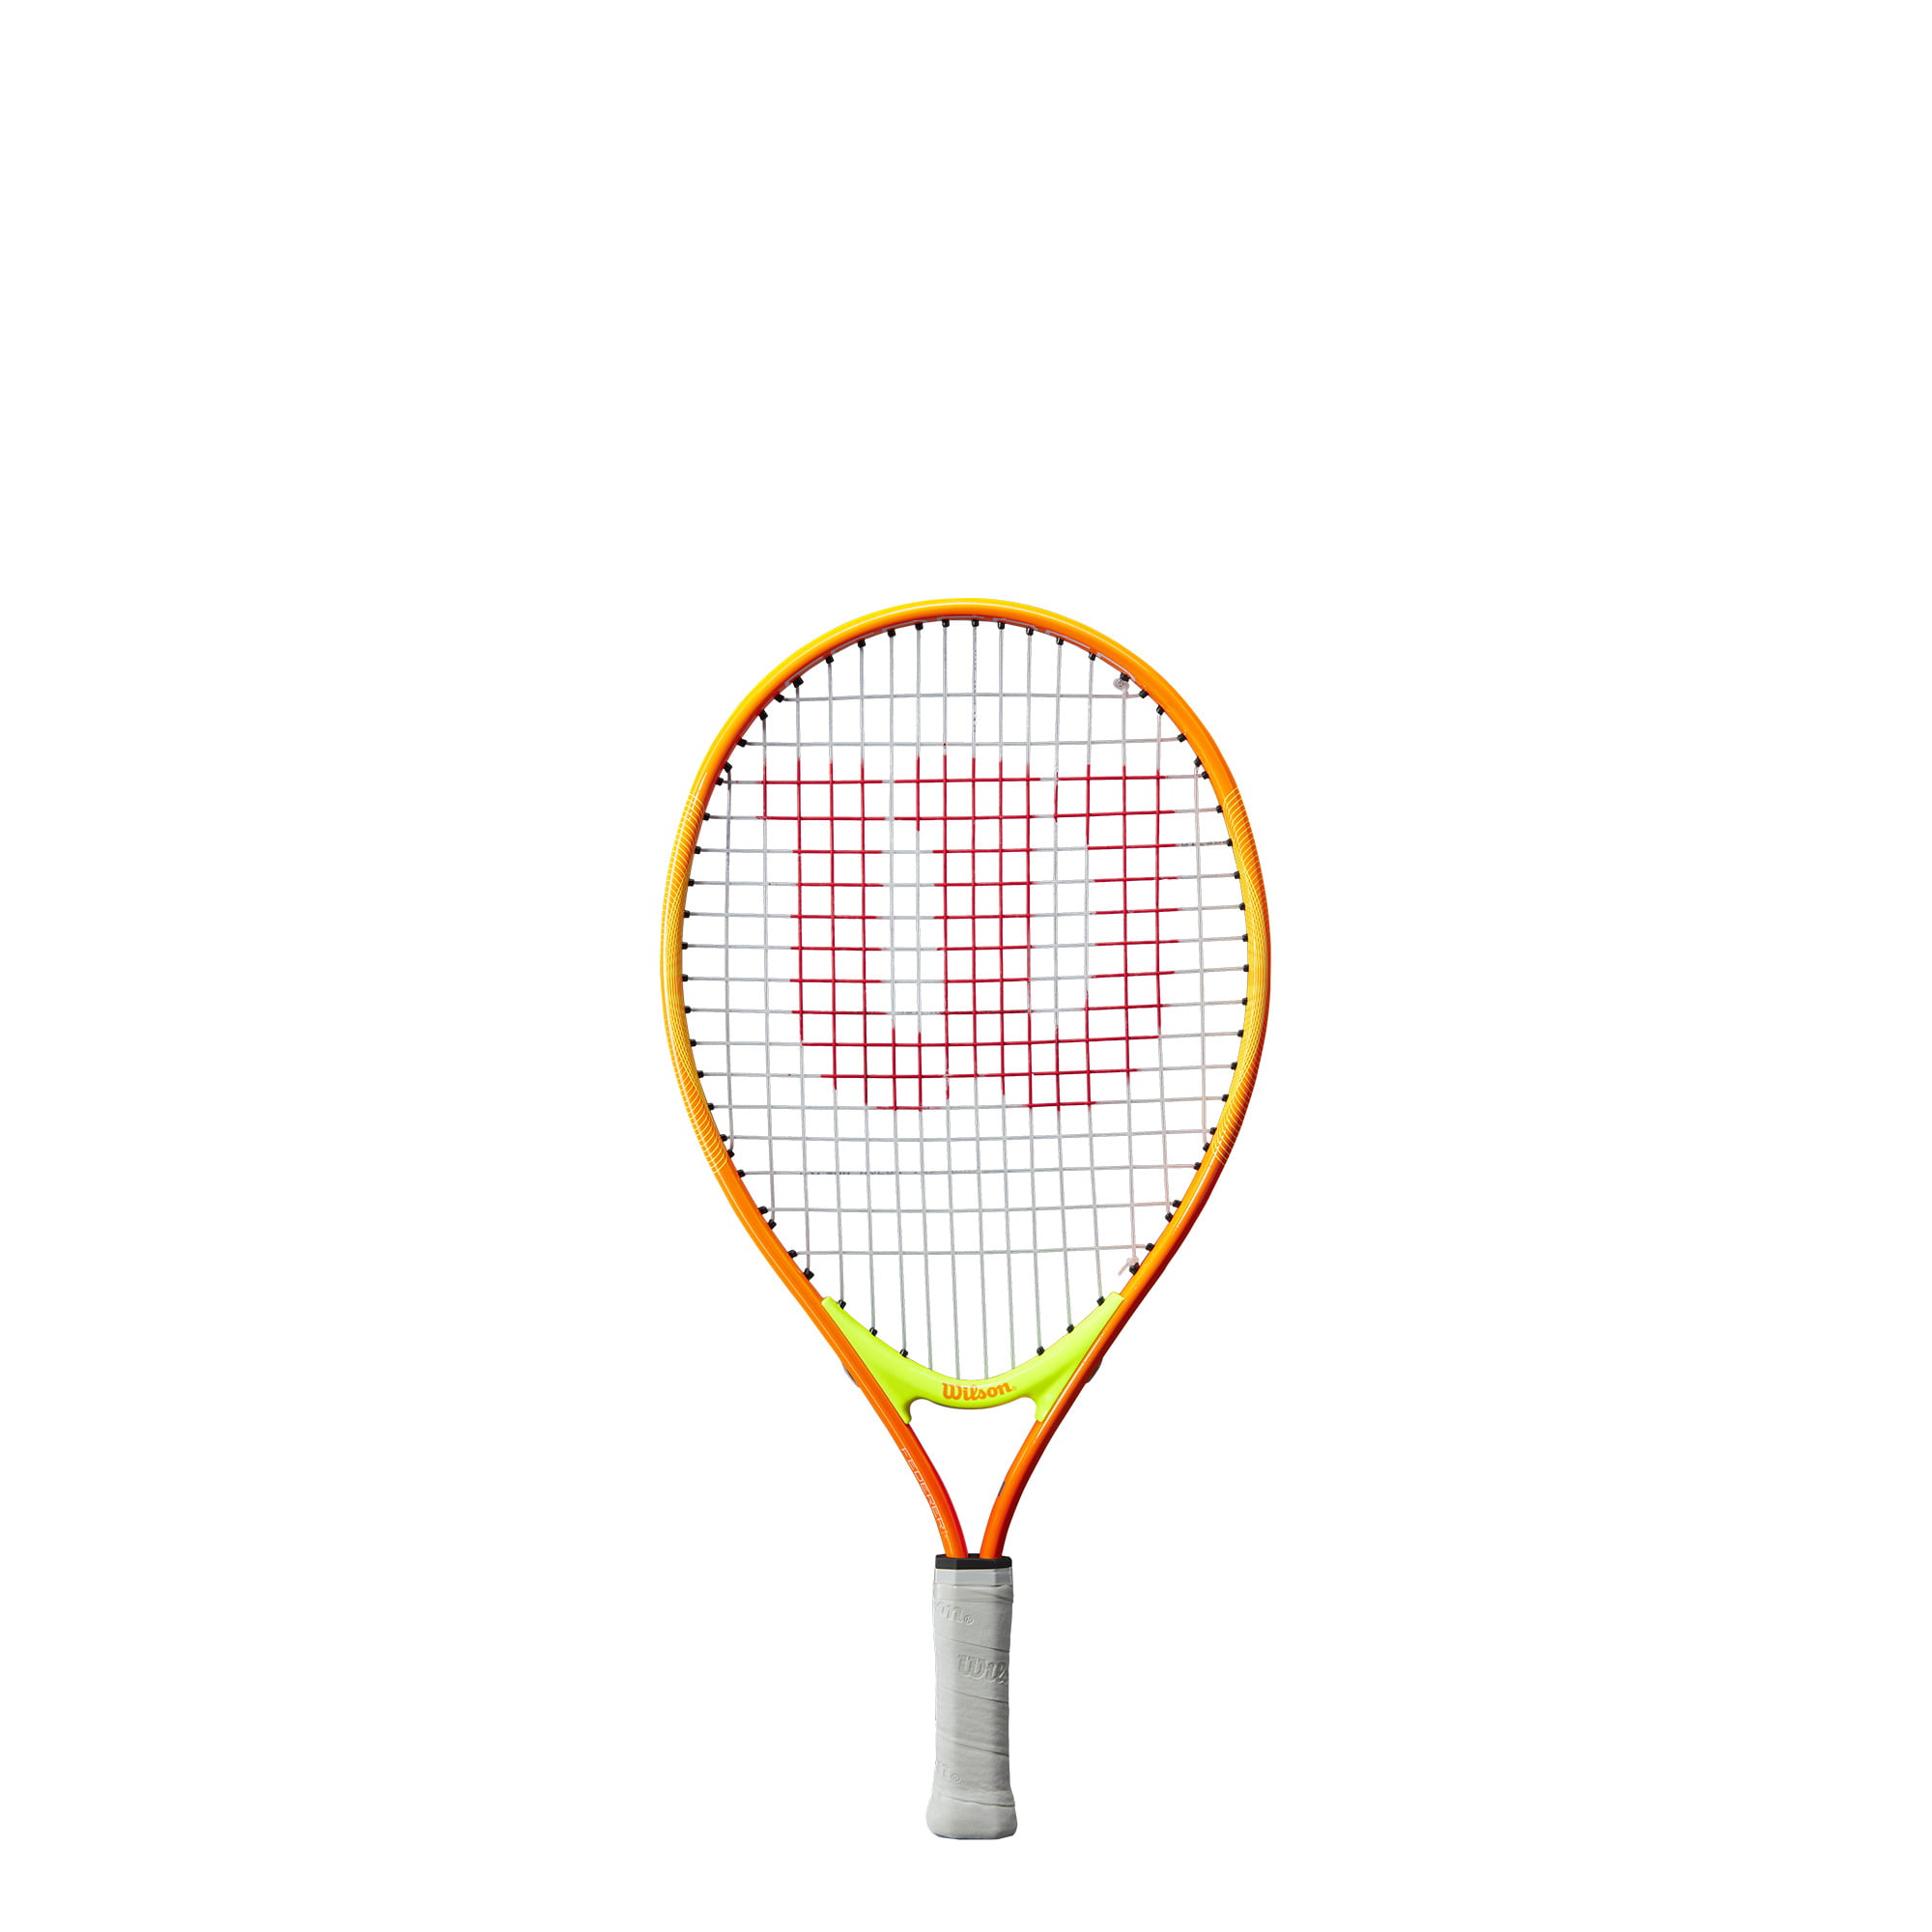 Durable PU Sweatband Cushion Wrap Grip Tape 27m for Tennis Badminton Racquet 